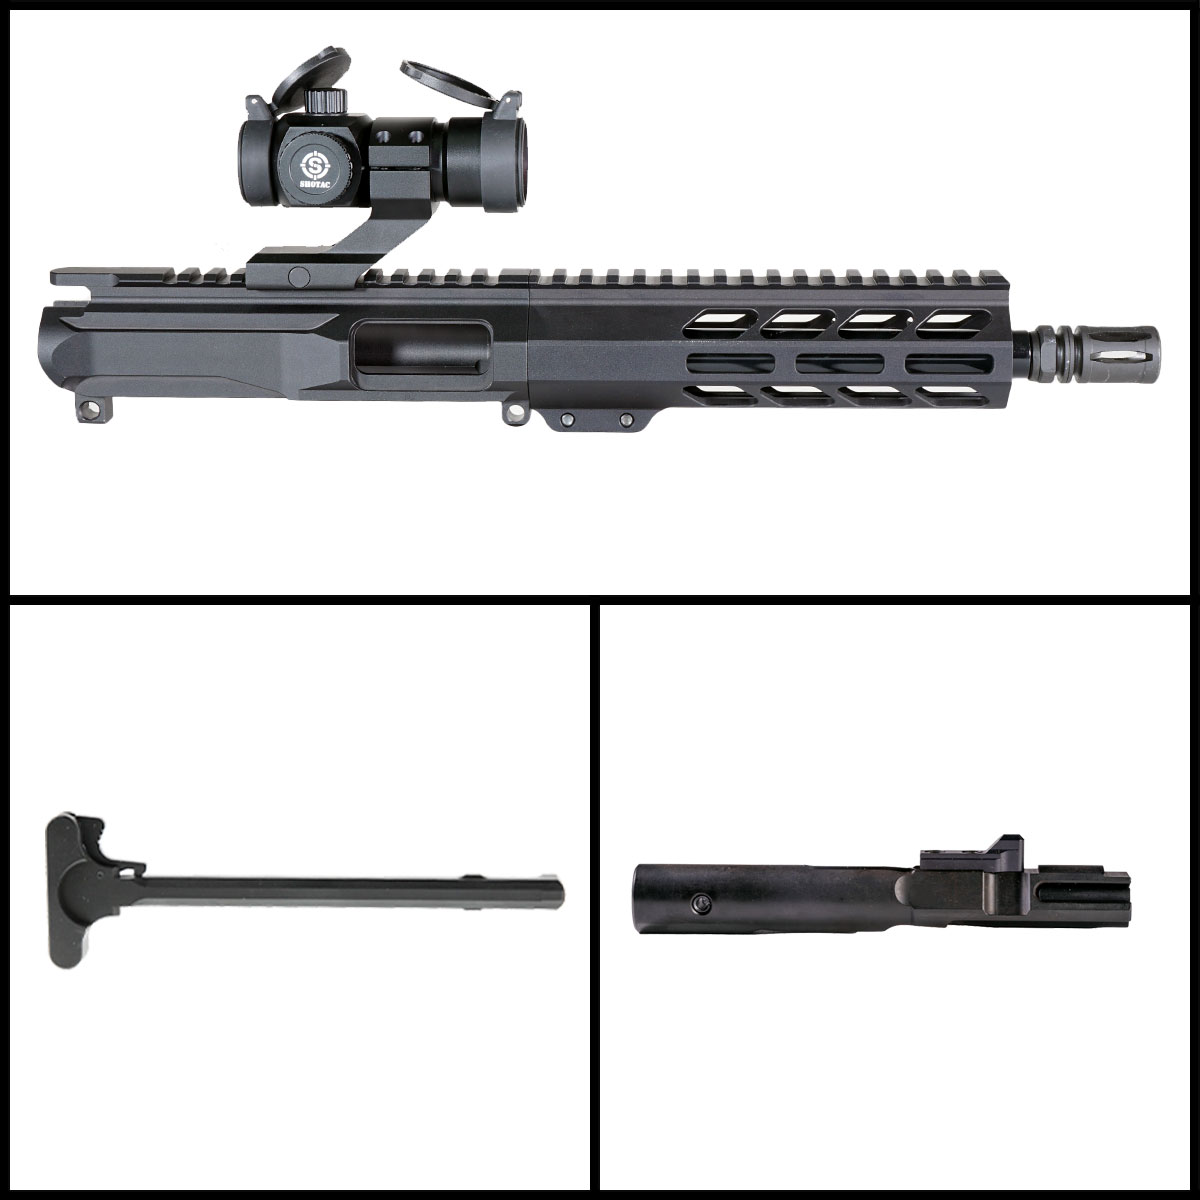 DTT 'Eternal Night Gen 2 w/ Shotac Cantilever' 8.5-inch AR-15 9mm Nitride Pistol Complete Upper Build Kit